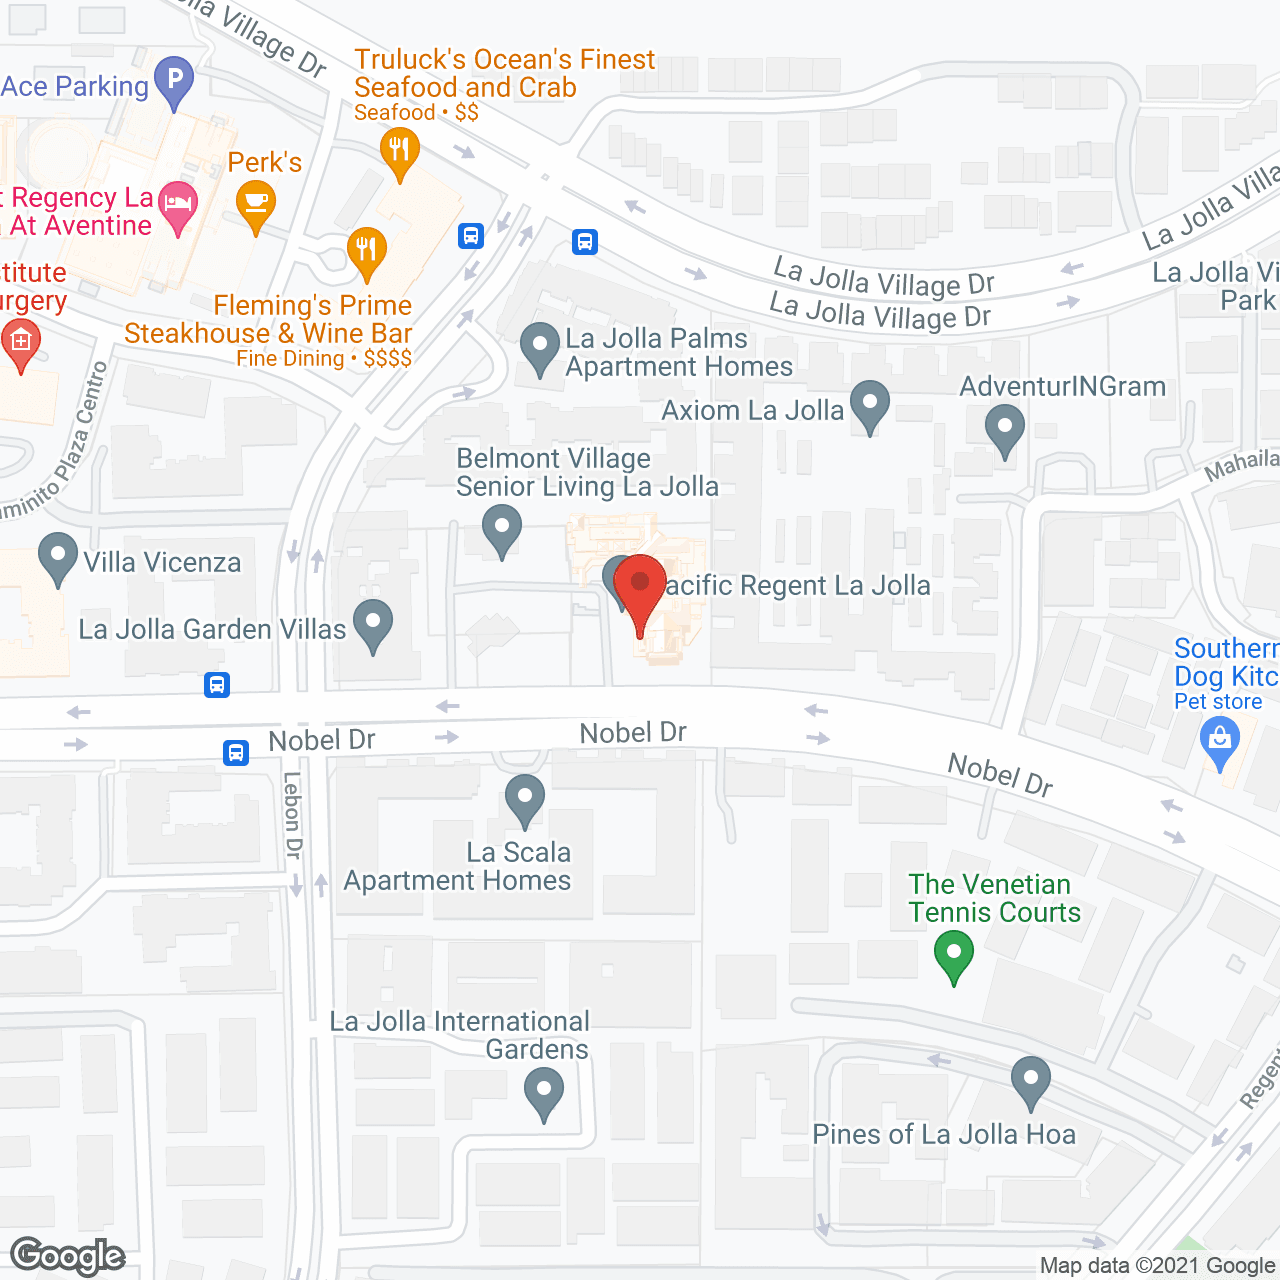 Pacific Regent La Jolla in google map